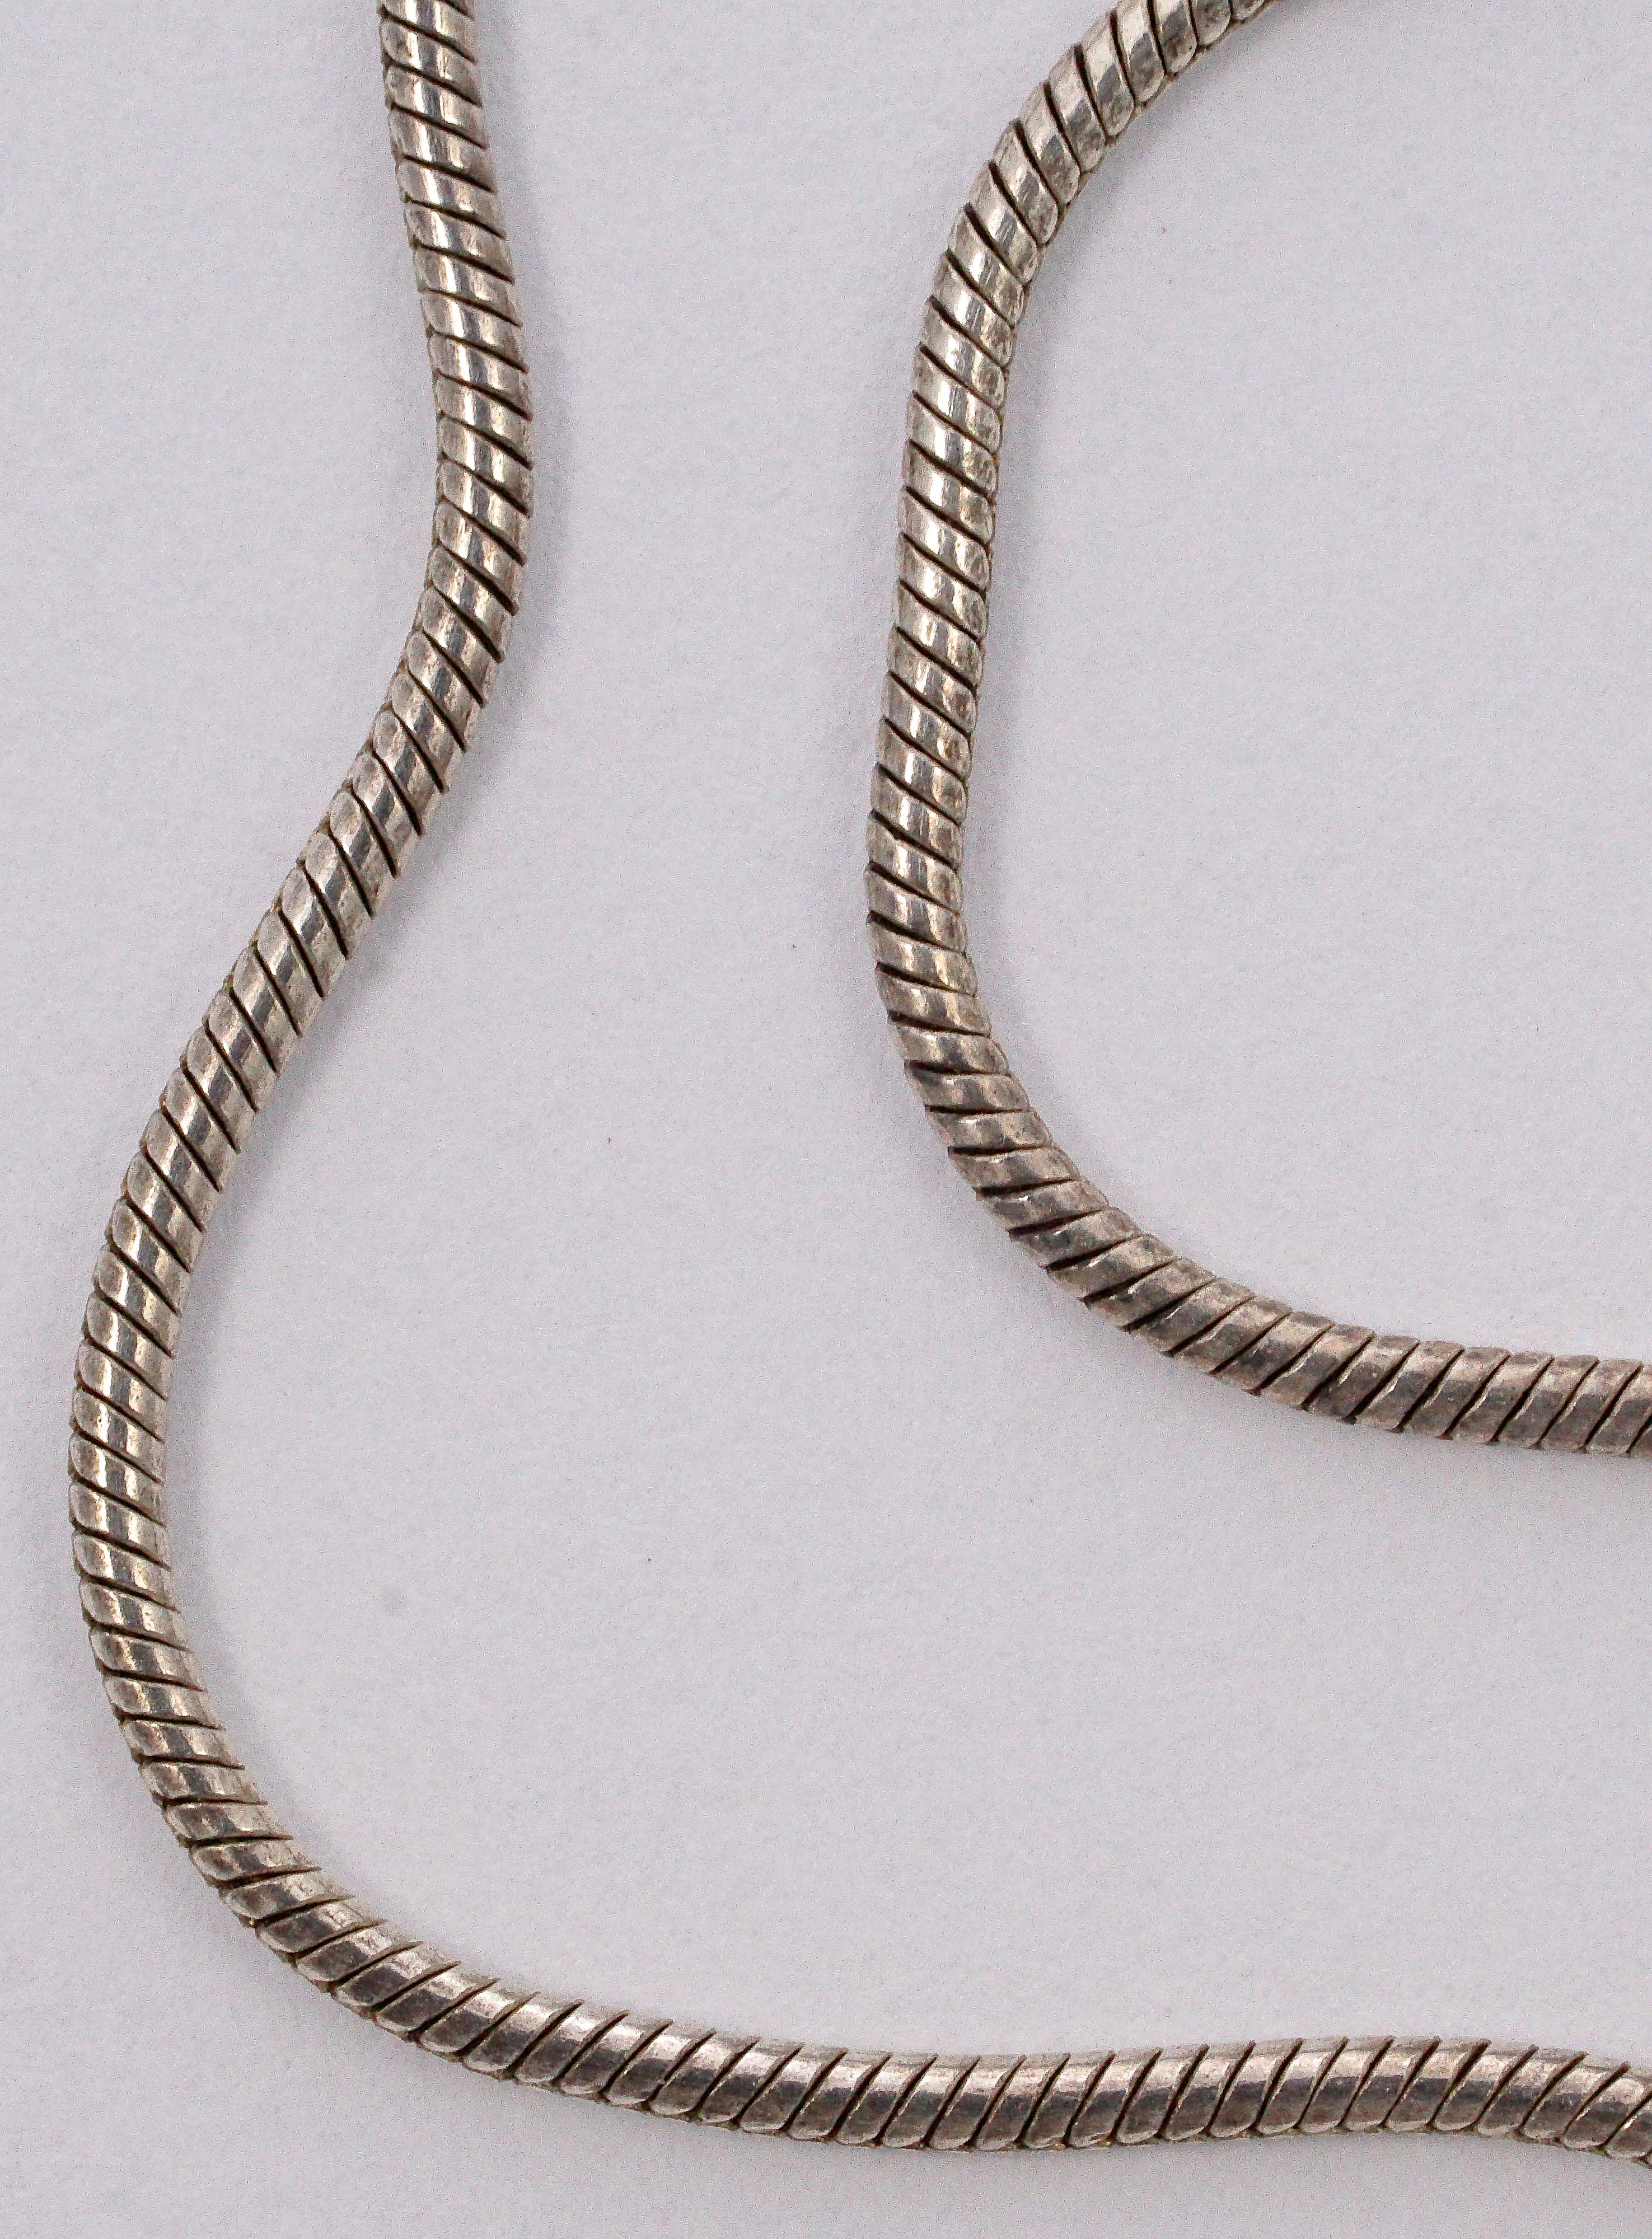 Long Italian Silver Snake Chain and Woven Heart Pendant Necklace circa 1990s 4